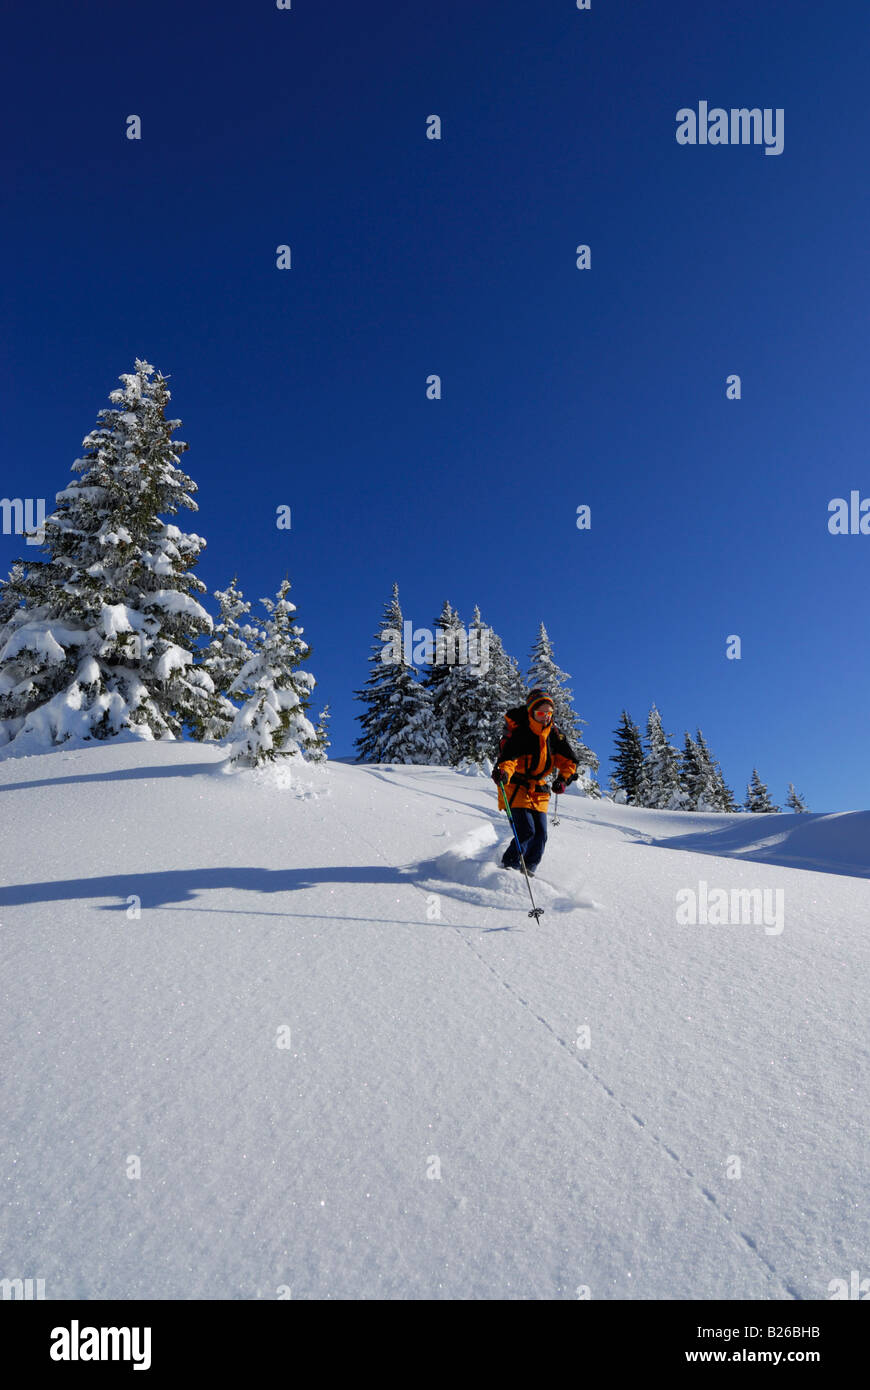 Skier skiing downhill, Feuerstaetter Kopf, Allgaeu Alps, Vorarlberg, Austria Stock Photo